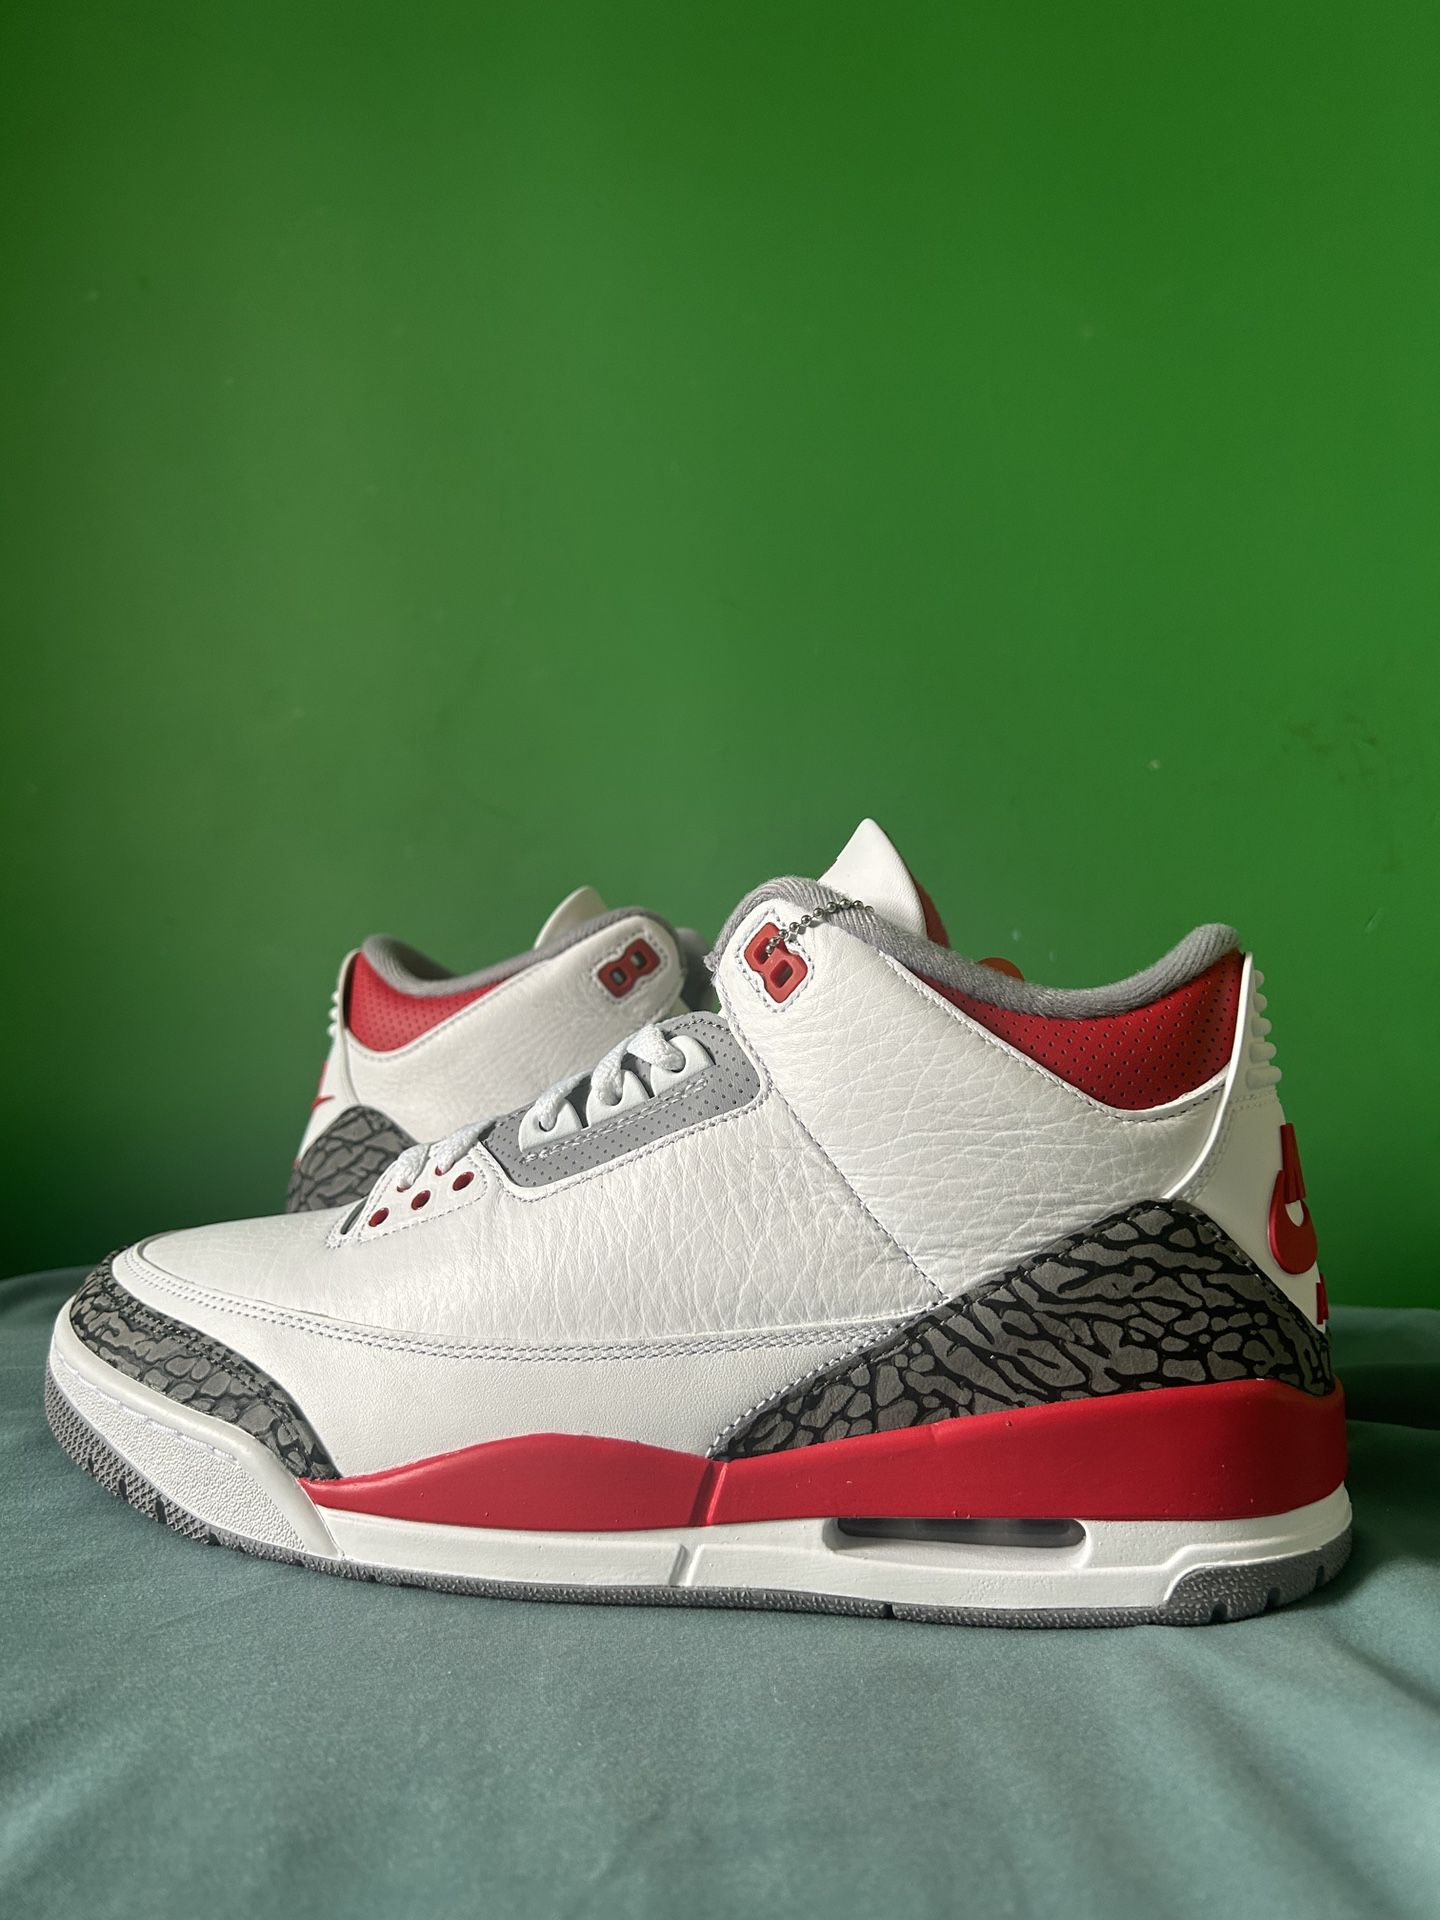 Nike Air Jordan 3 Fire Red Size 12